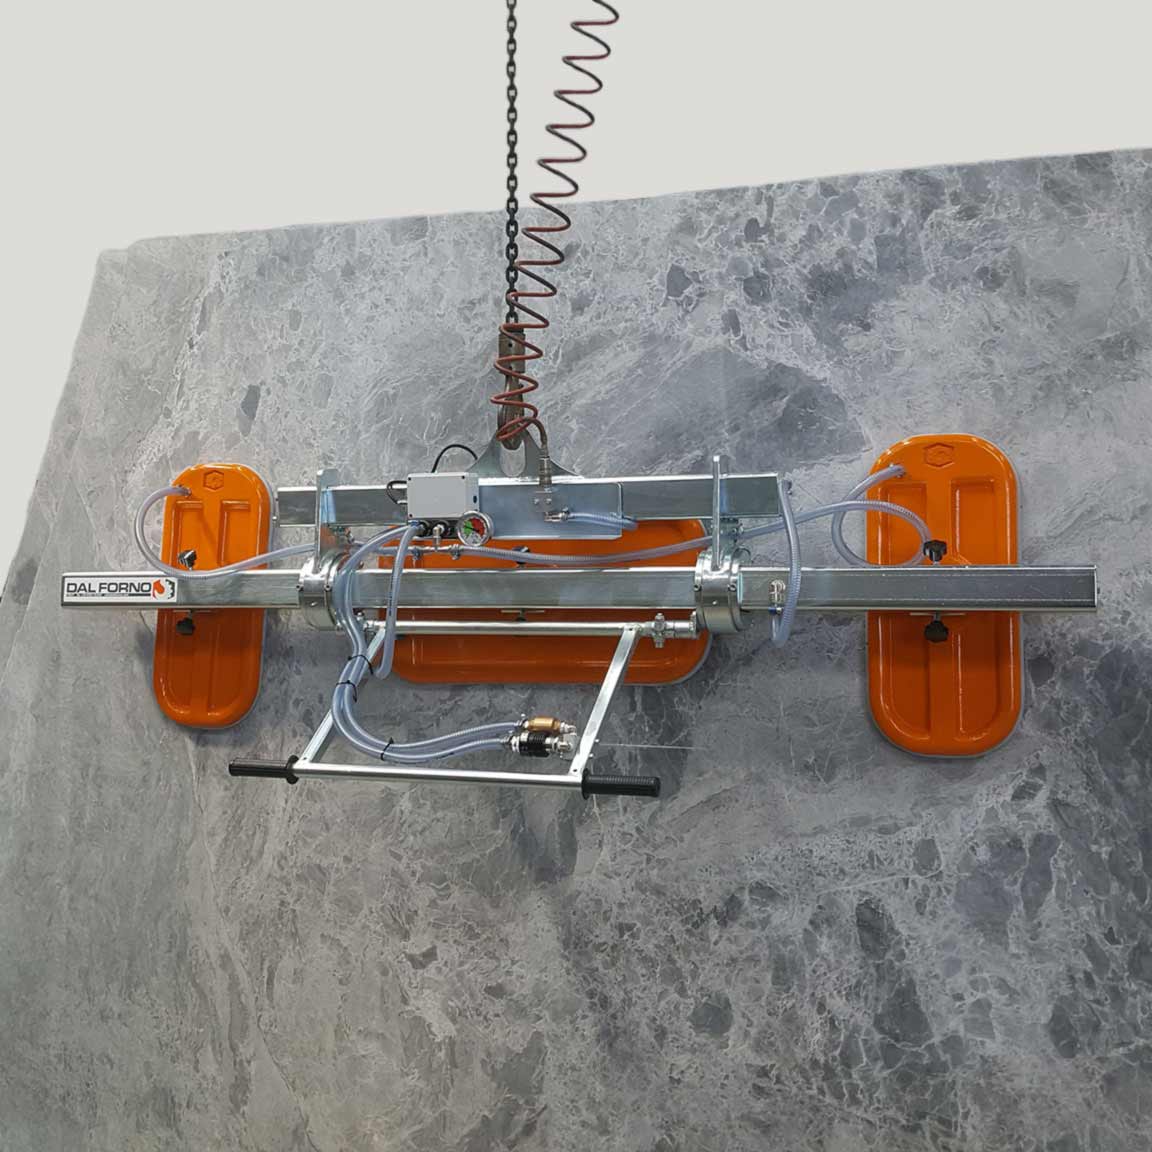 Vacuum stone lifter